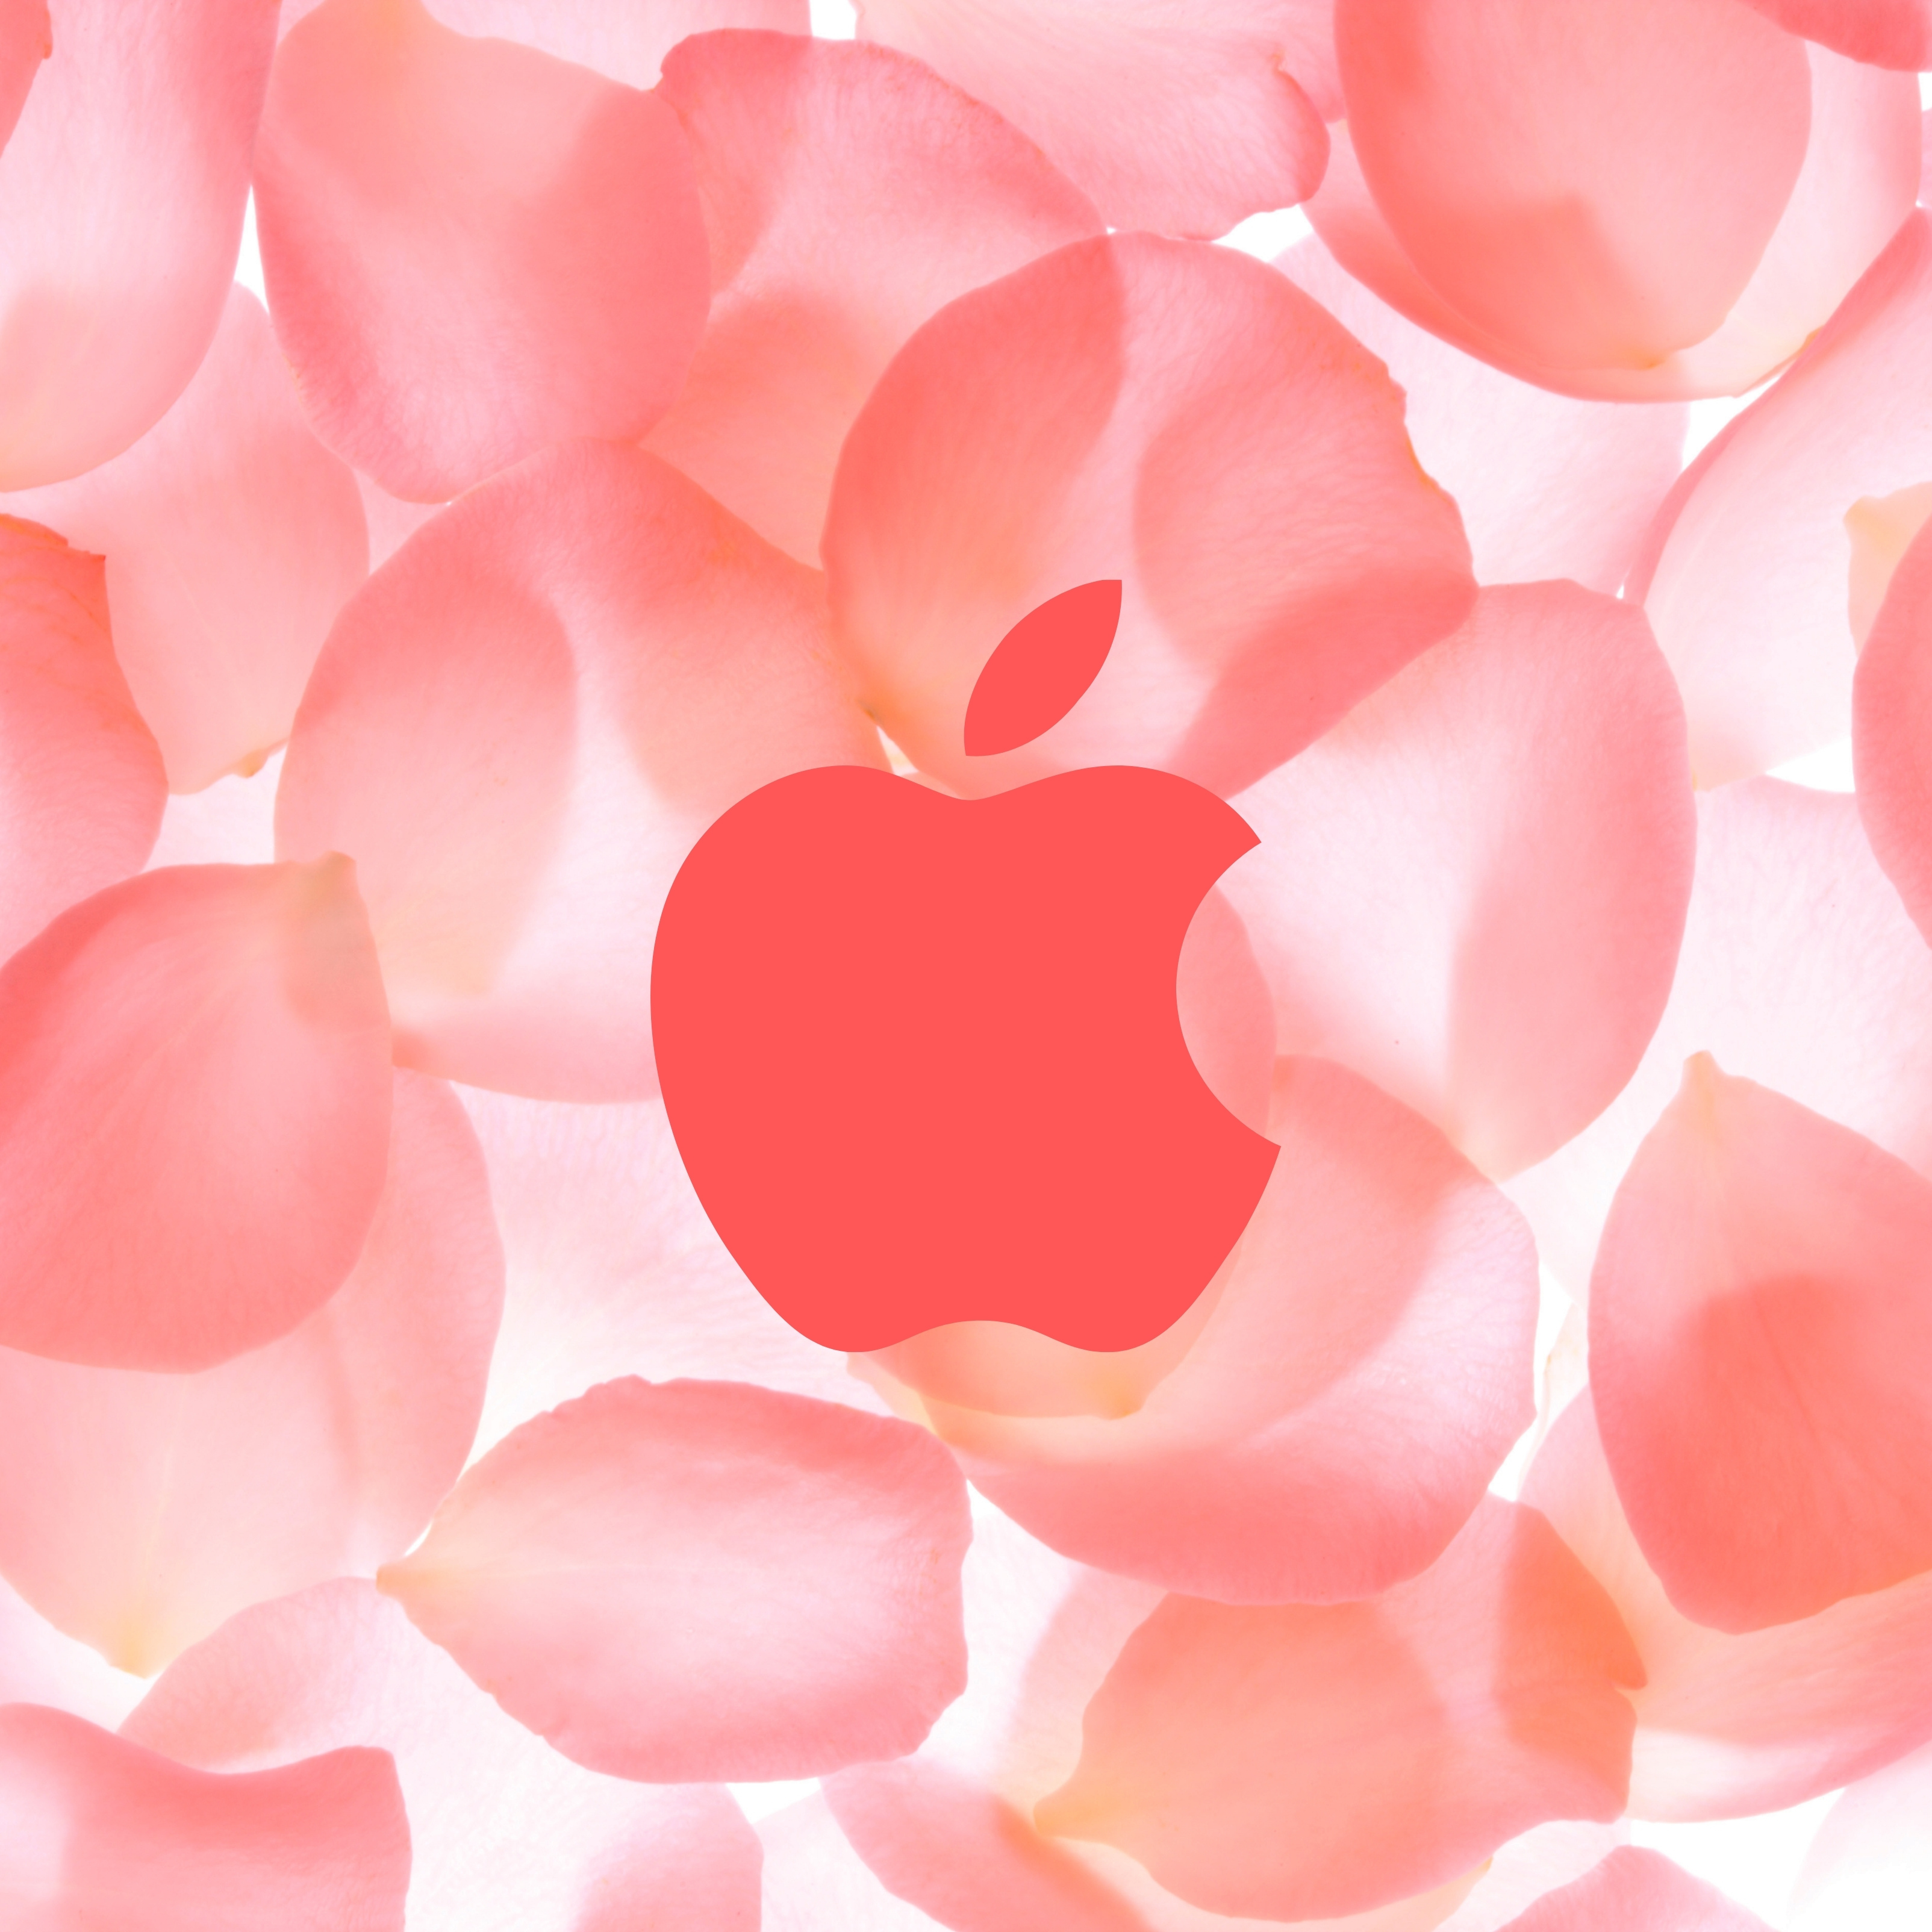 iPad Wallpapers Apple Logo Iphone Macos Beautiful Flower Background iPad Wallpaper 3208x3208 px